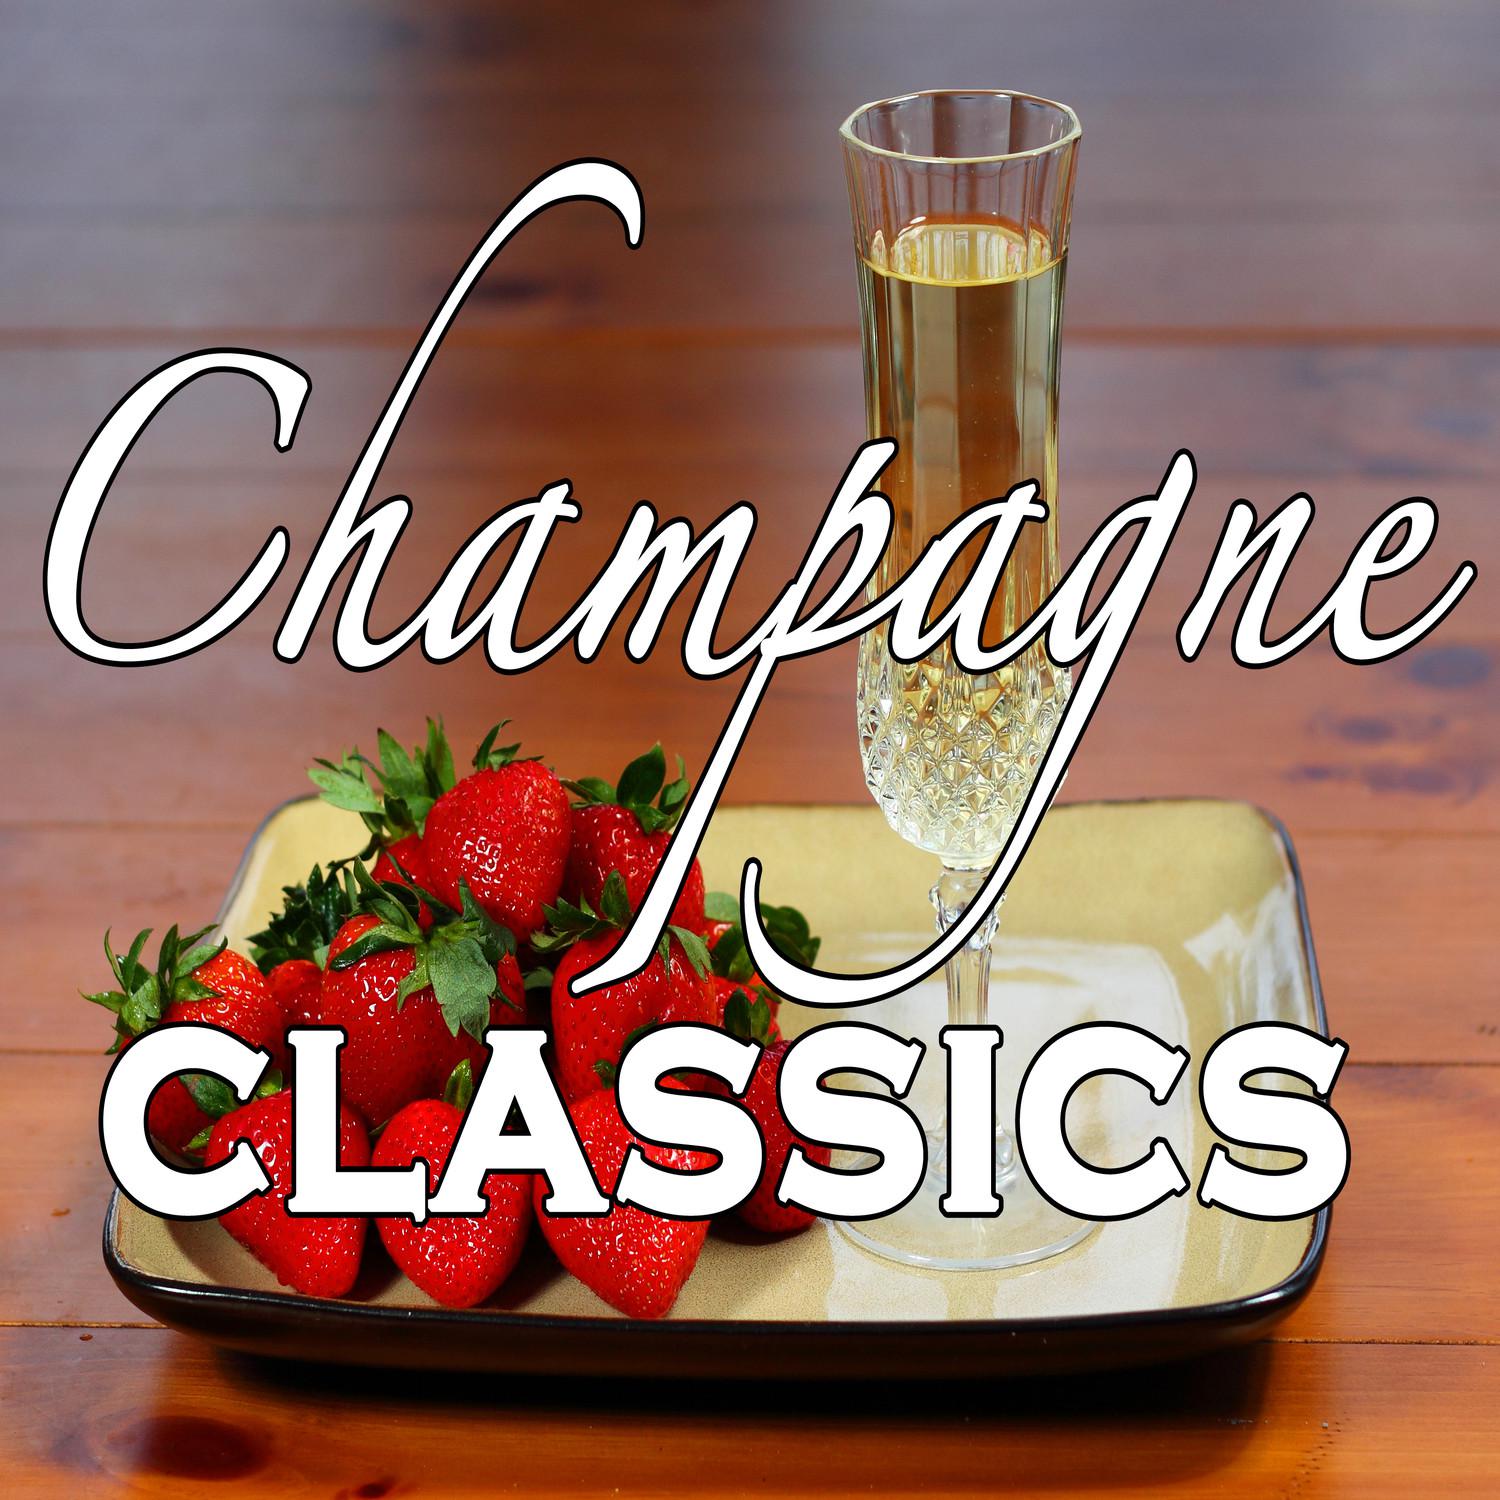 Champagner Galopp, Op.8